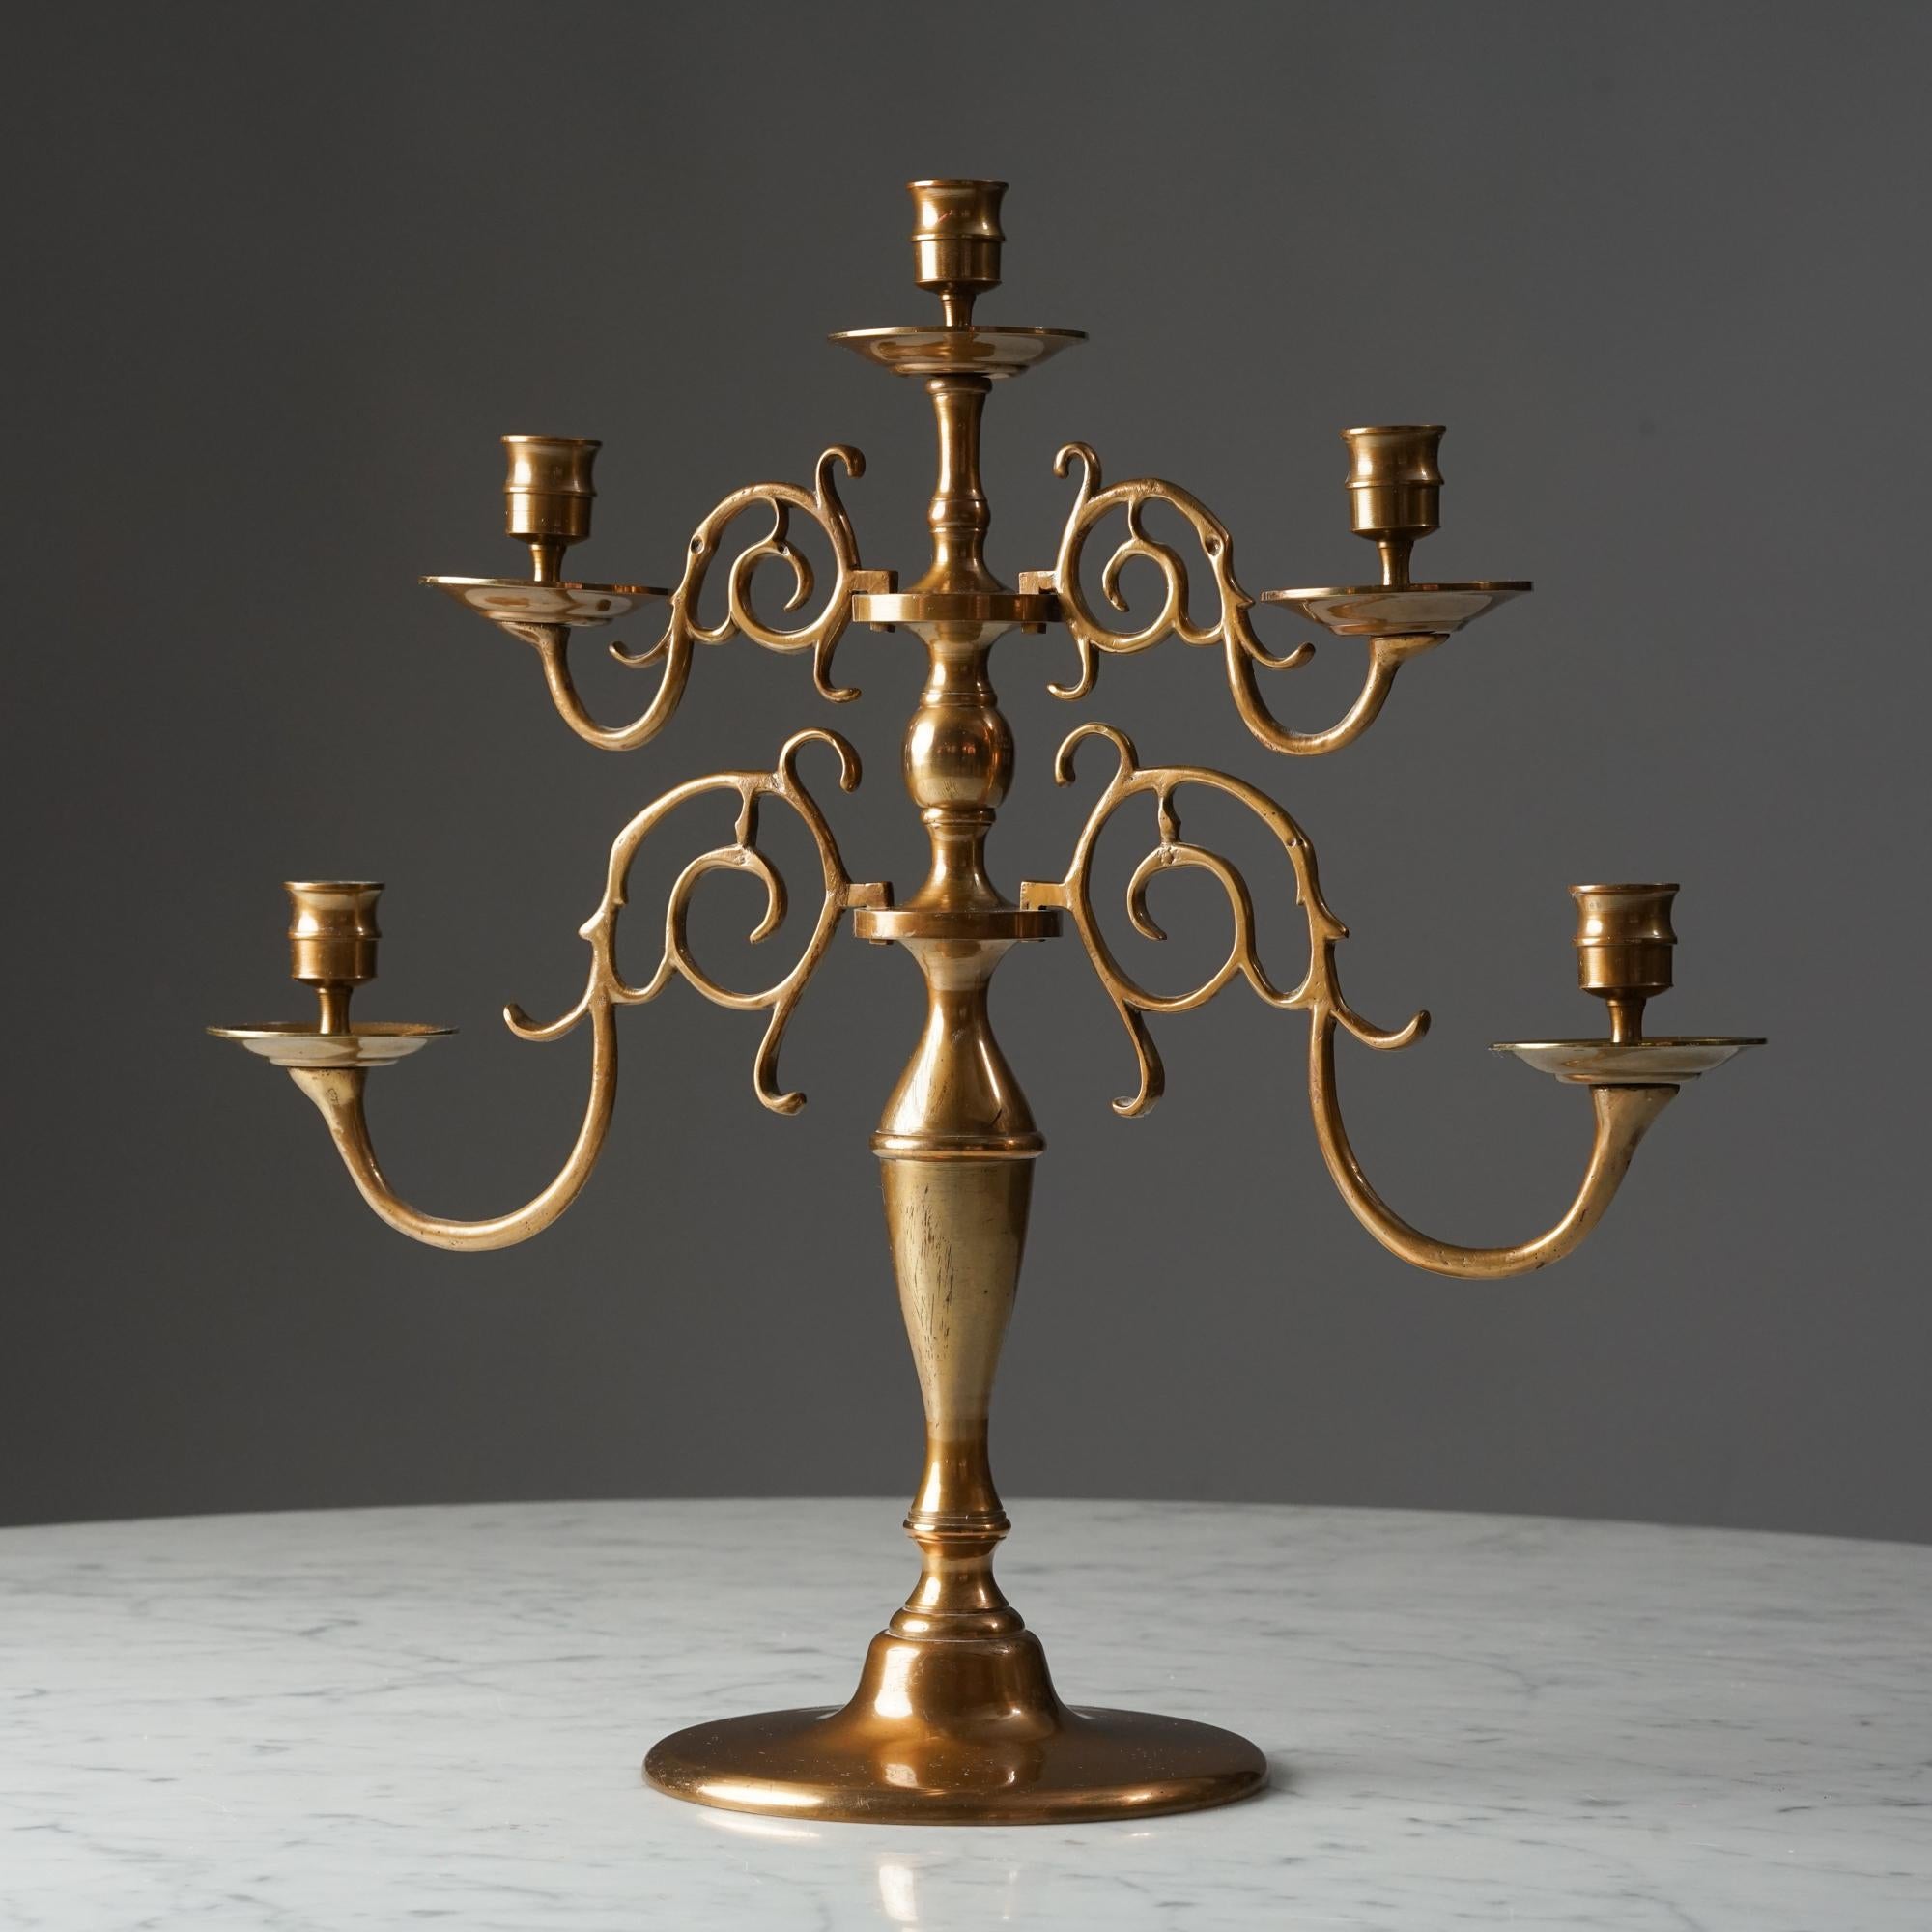 Rare brass candelabra model 1503 by Taidetakomo Hakkarainen, Finland, 1940s.
Solid Brass. 
Measurements: width 40.5 cm, depth 15 cm (bottom diameter), height 38.5 cm.